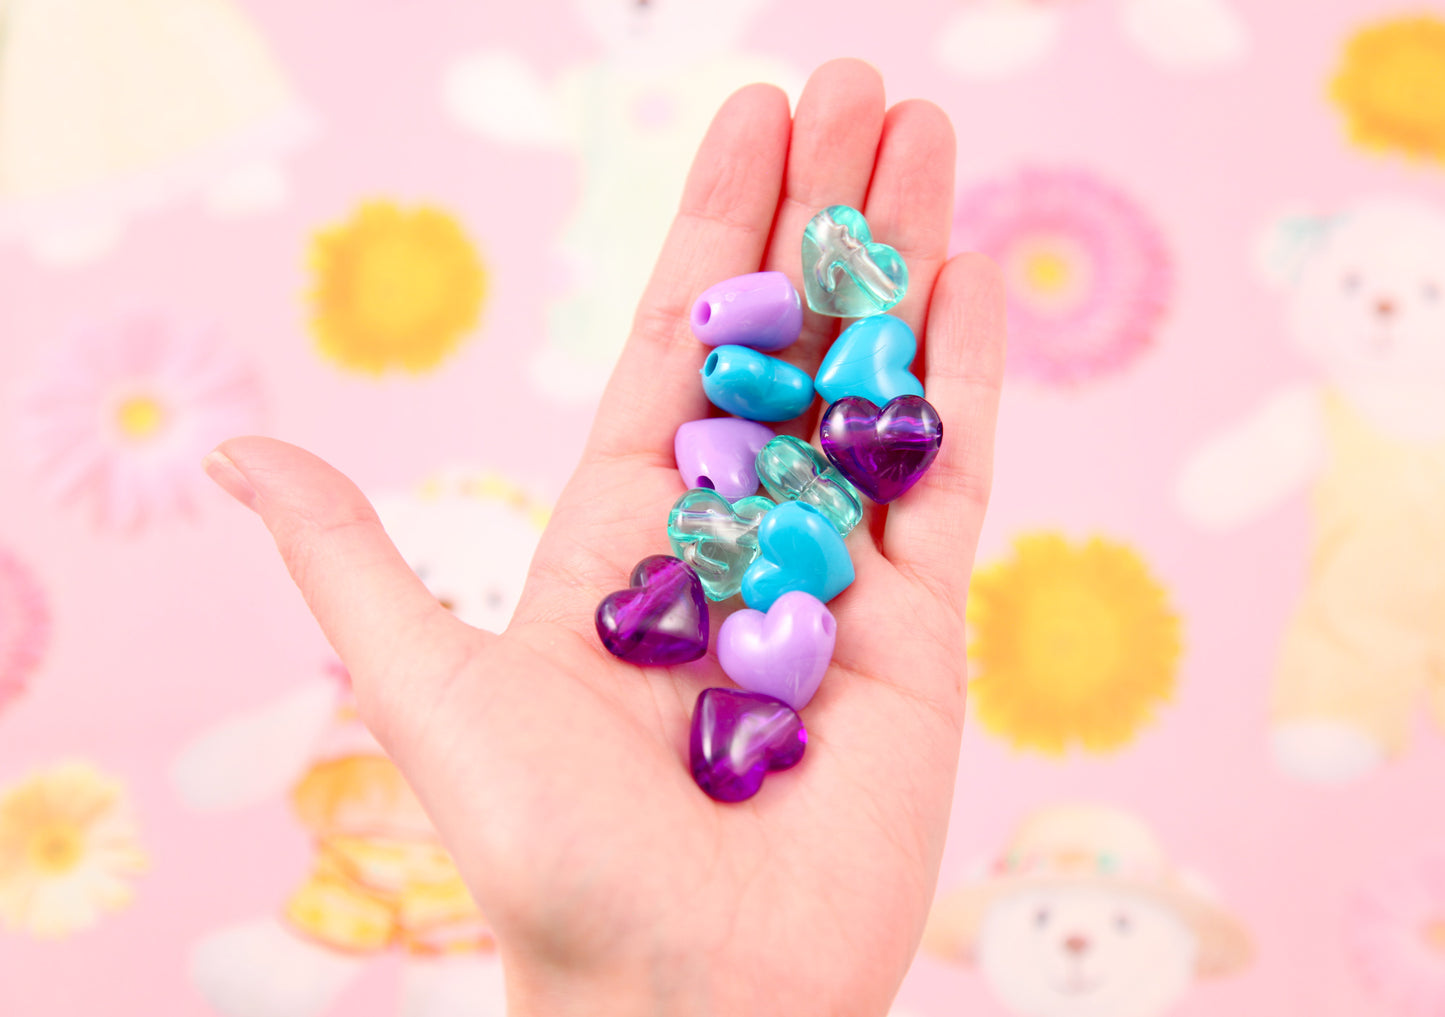 Plastic Heart Beads - 17mm Aqua Blue and Purple Mix Classic Puffy Heart Acrylic or Resin Beads - 24 pcs set